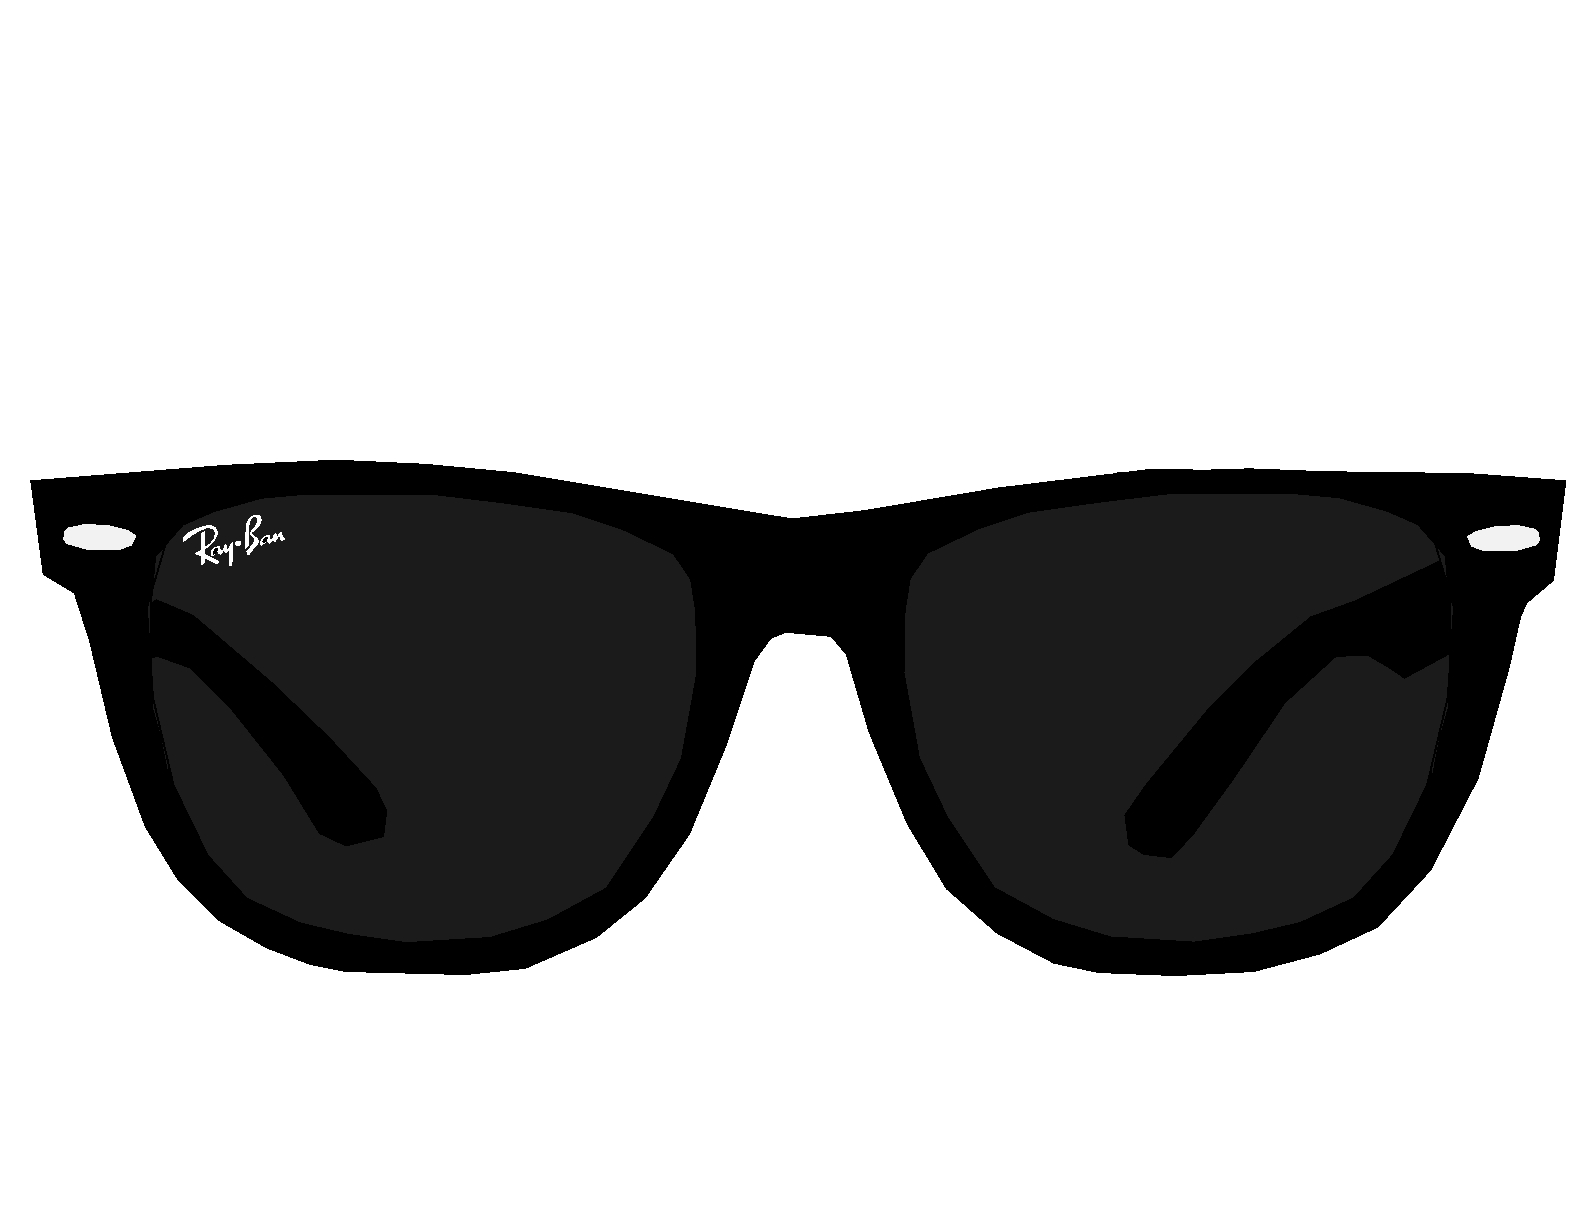 cartoon sunglasses png